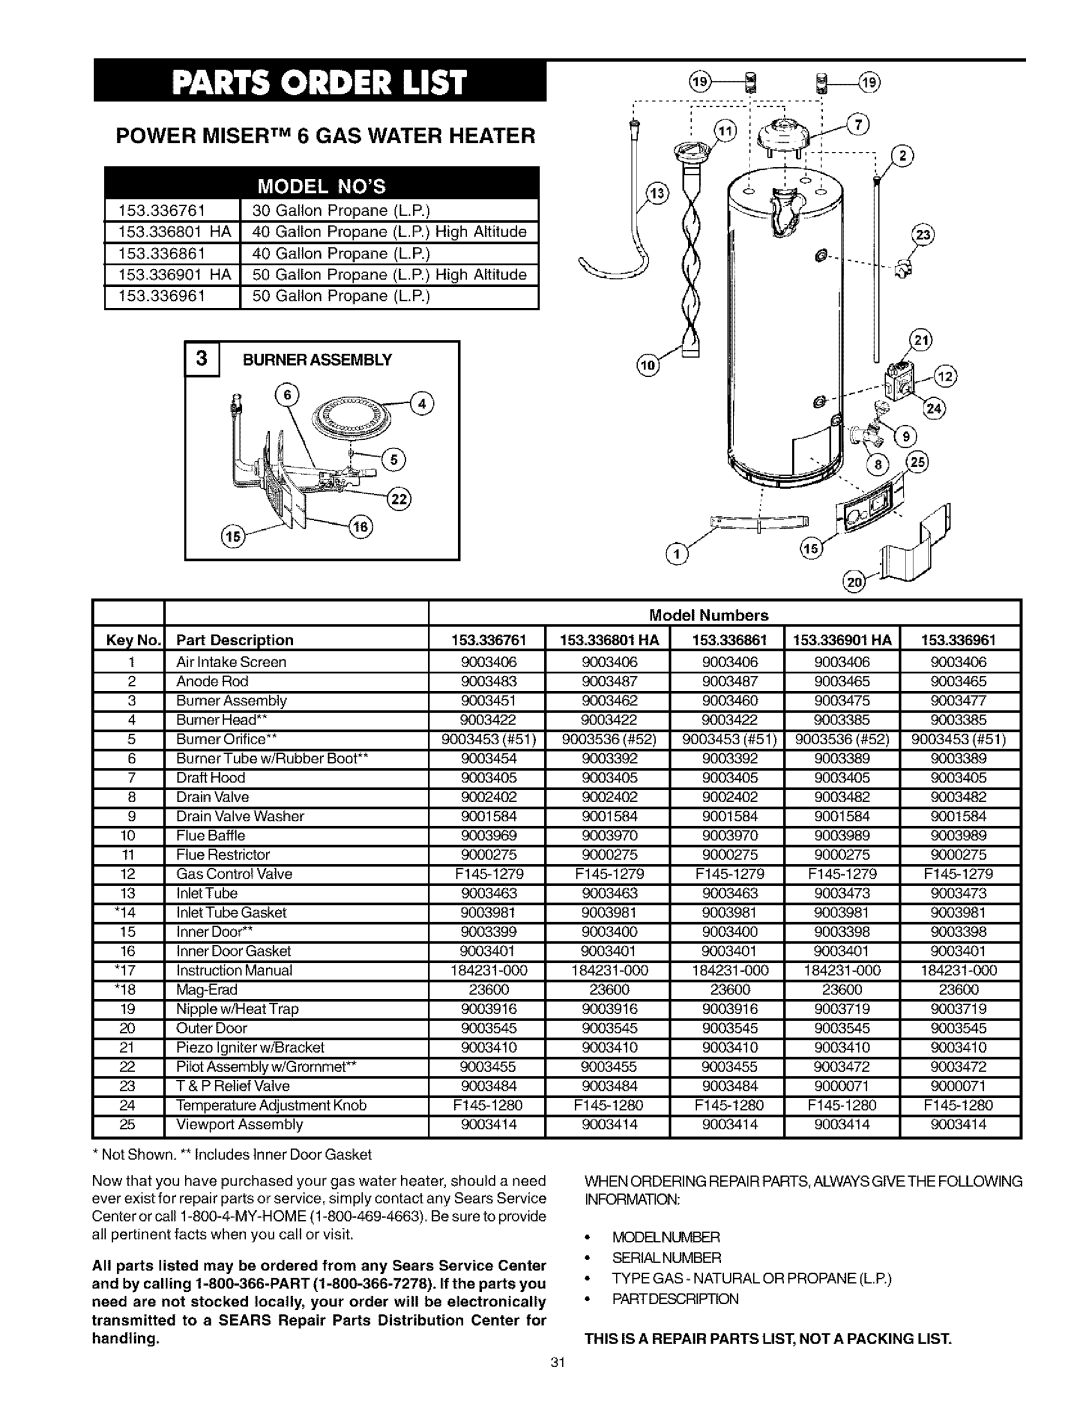 Kenmore POWER MISER TM 6 GAS WATER HEATER, 153.336761 30 Gallon Propane L.E, 153.336861 40 Gallon Propane L.P 